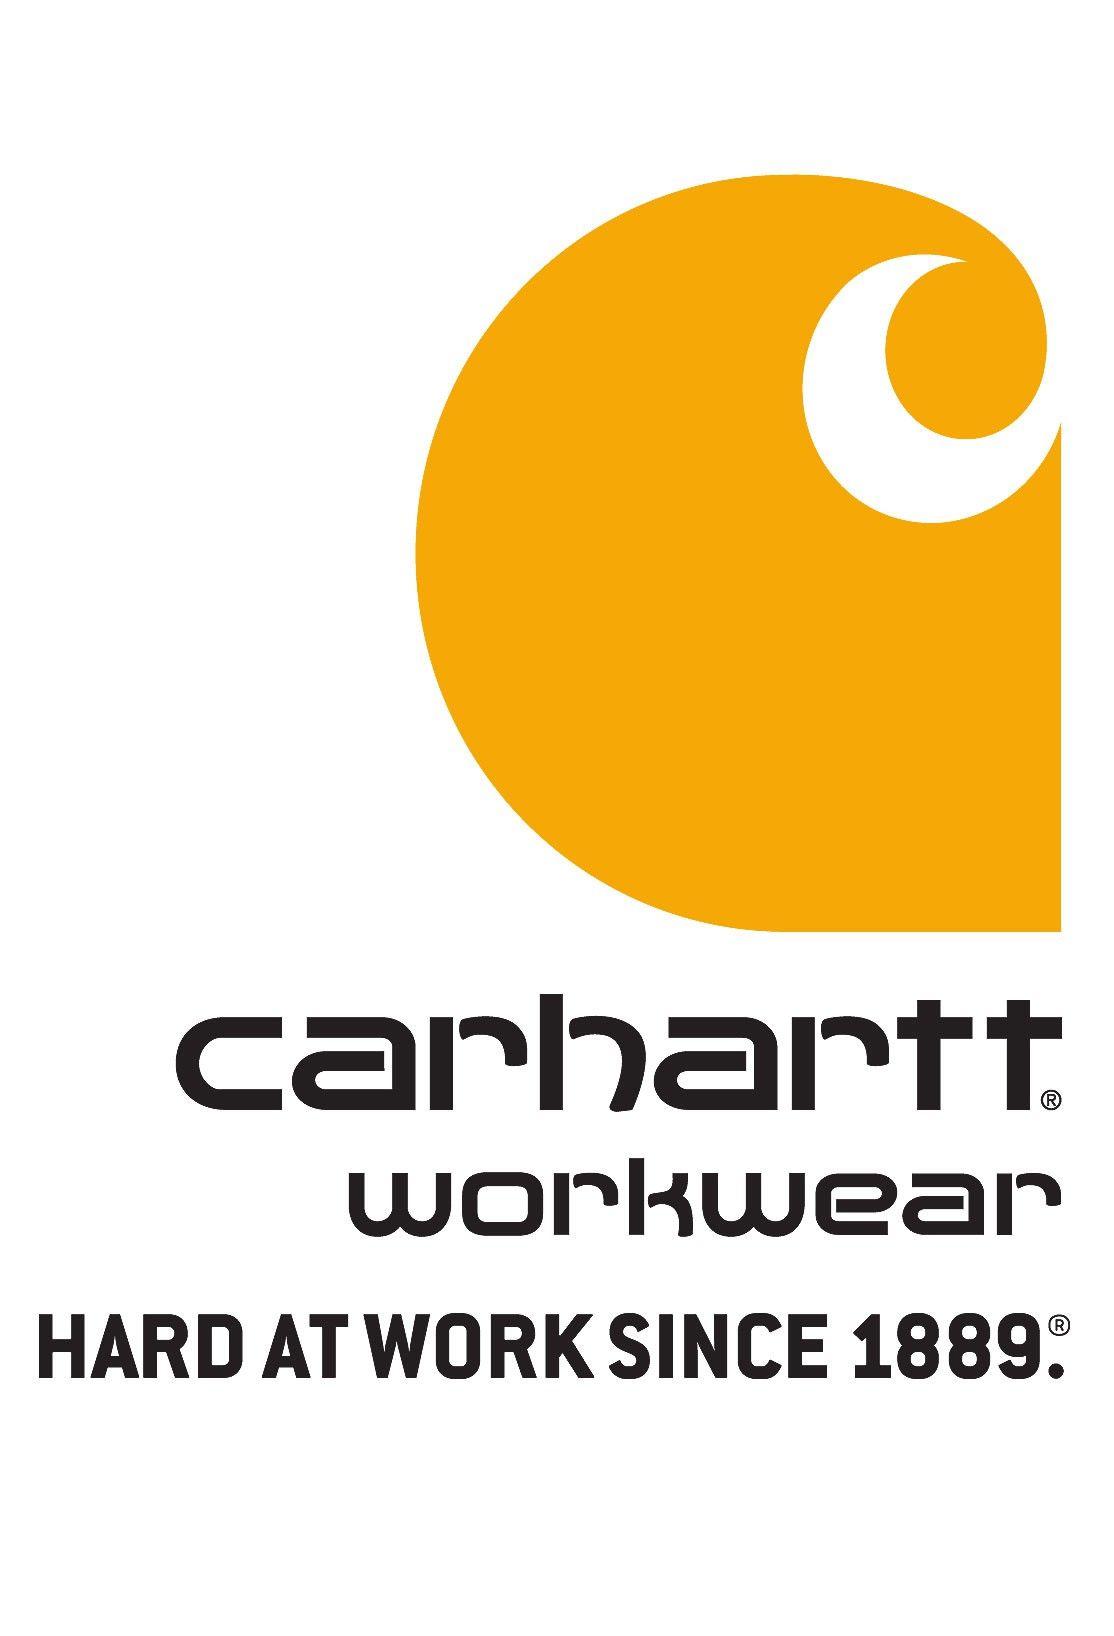 Carrhart Logo - Carhartt Logos